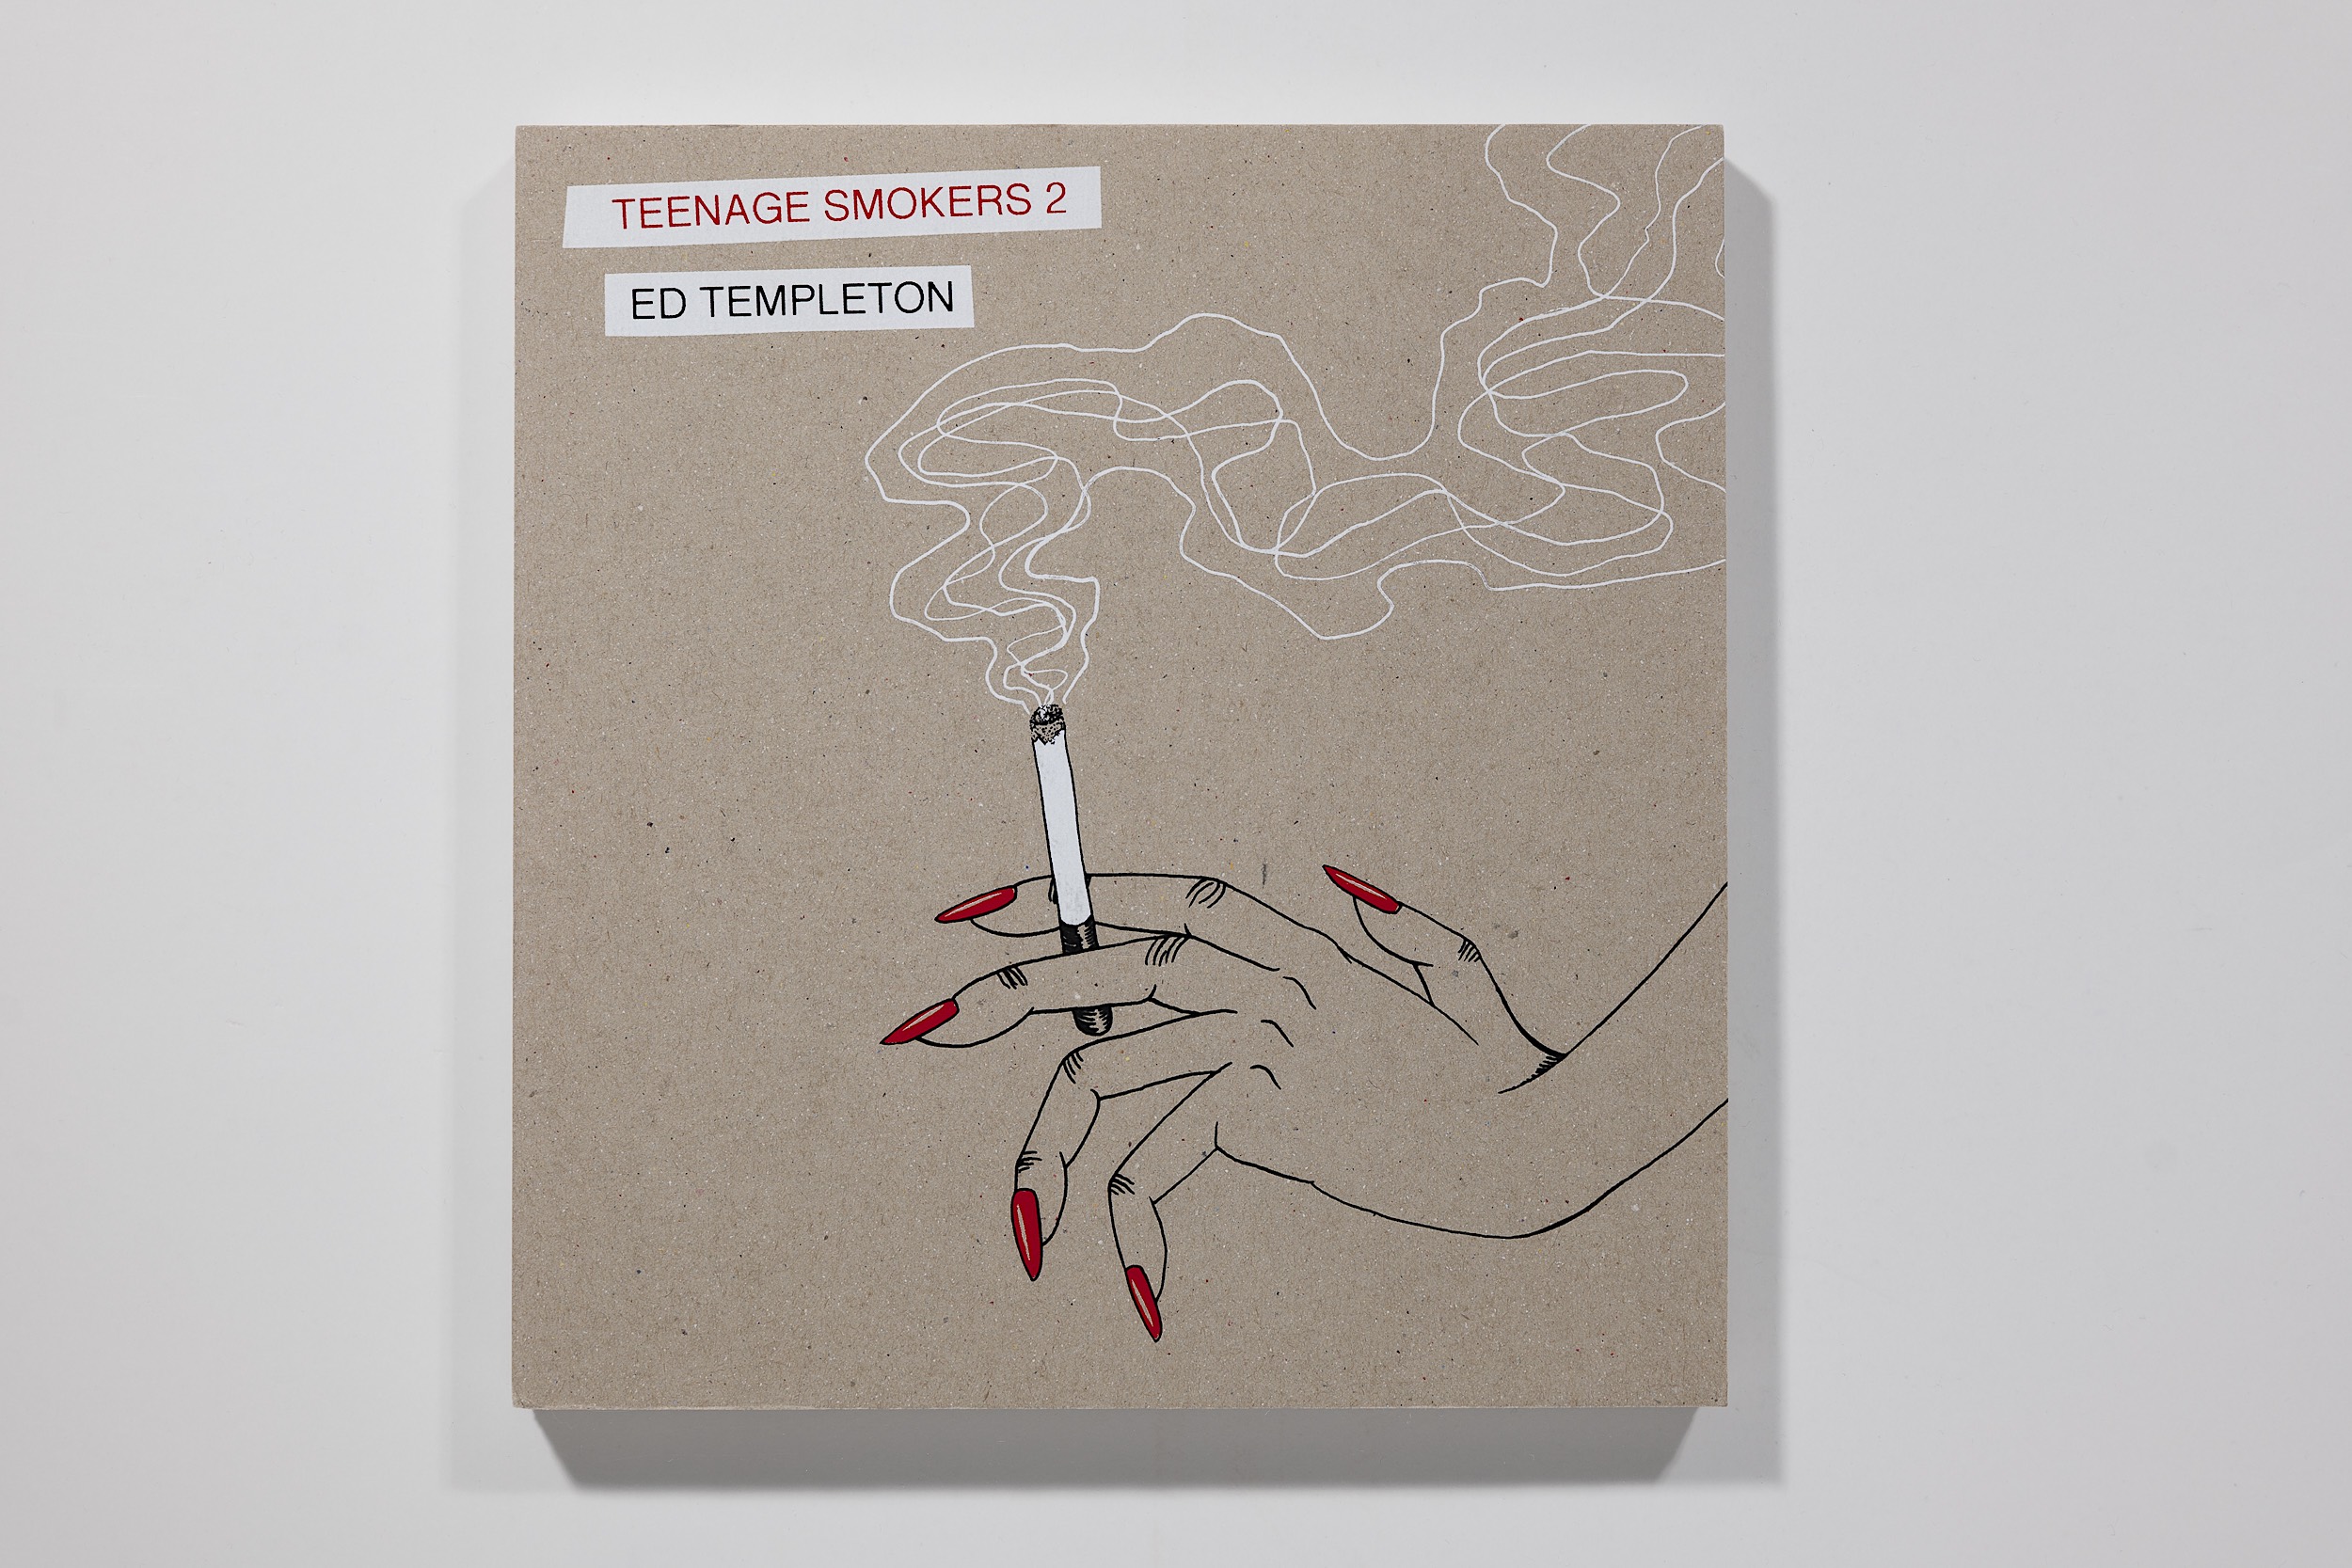 Ed Templeton - Teenage Smokers 2 Image 1